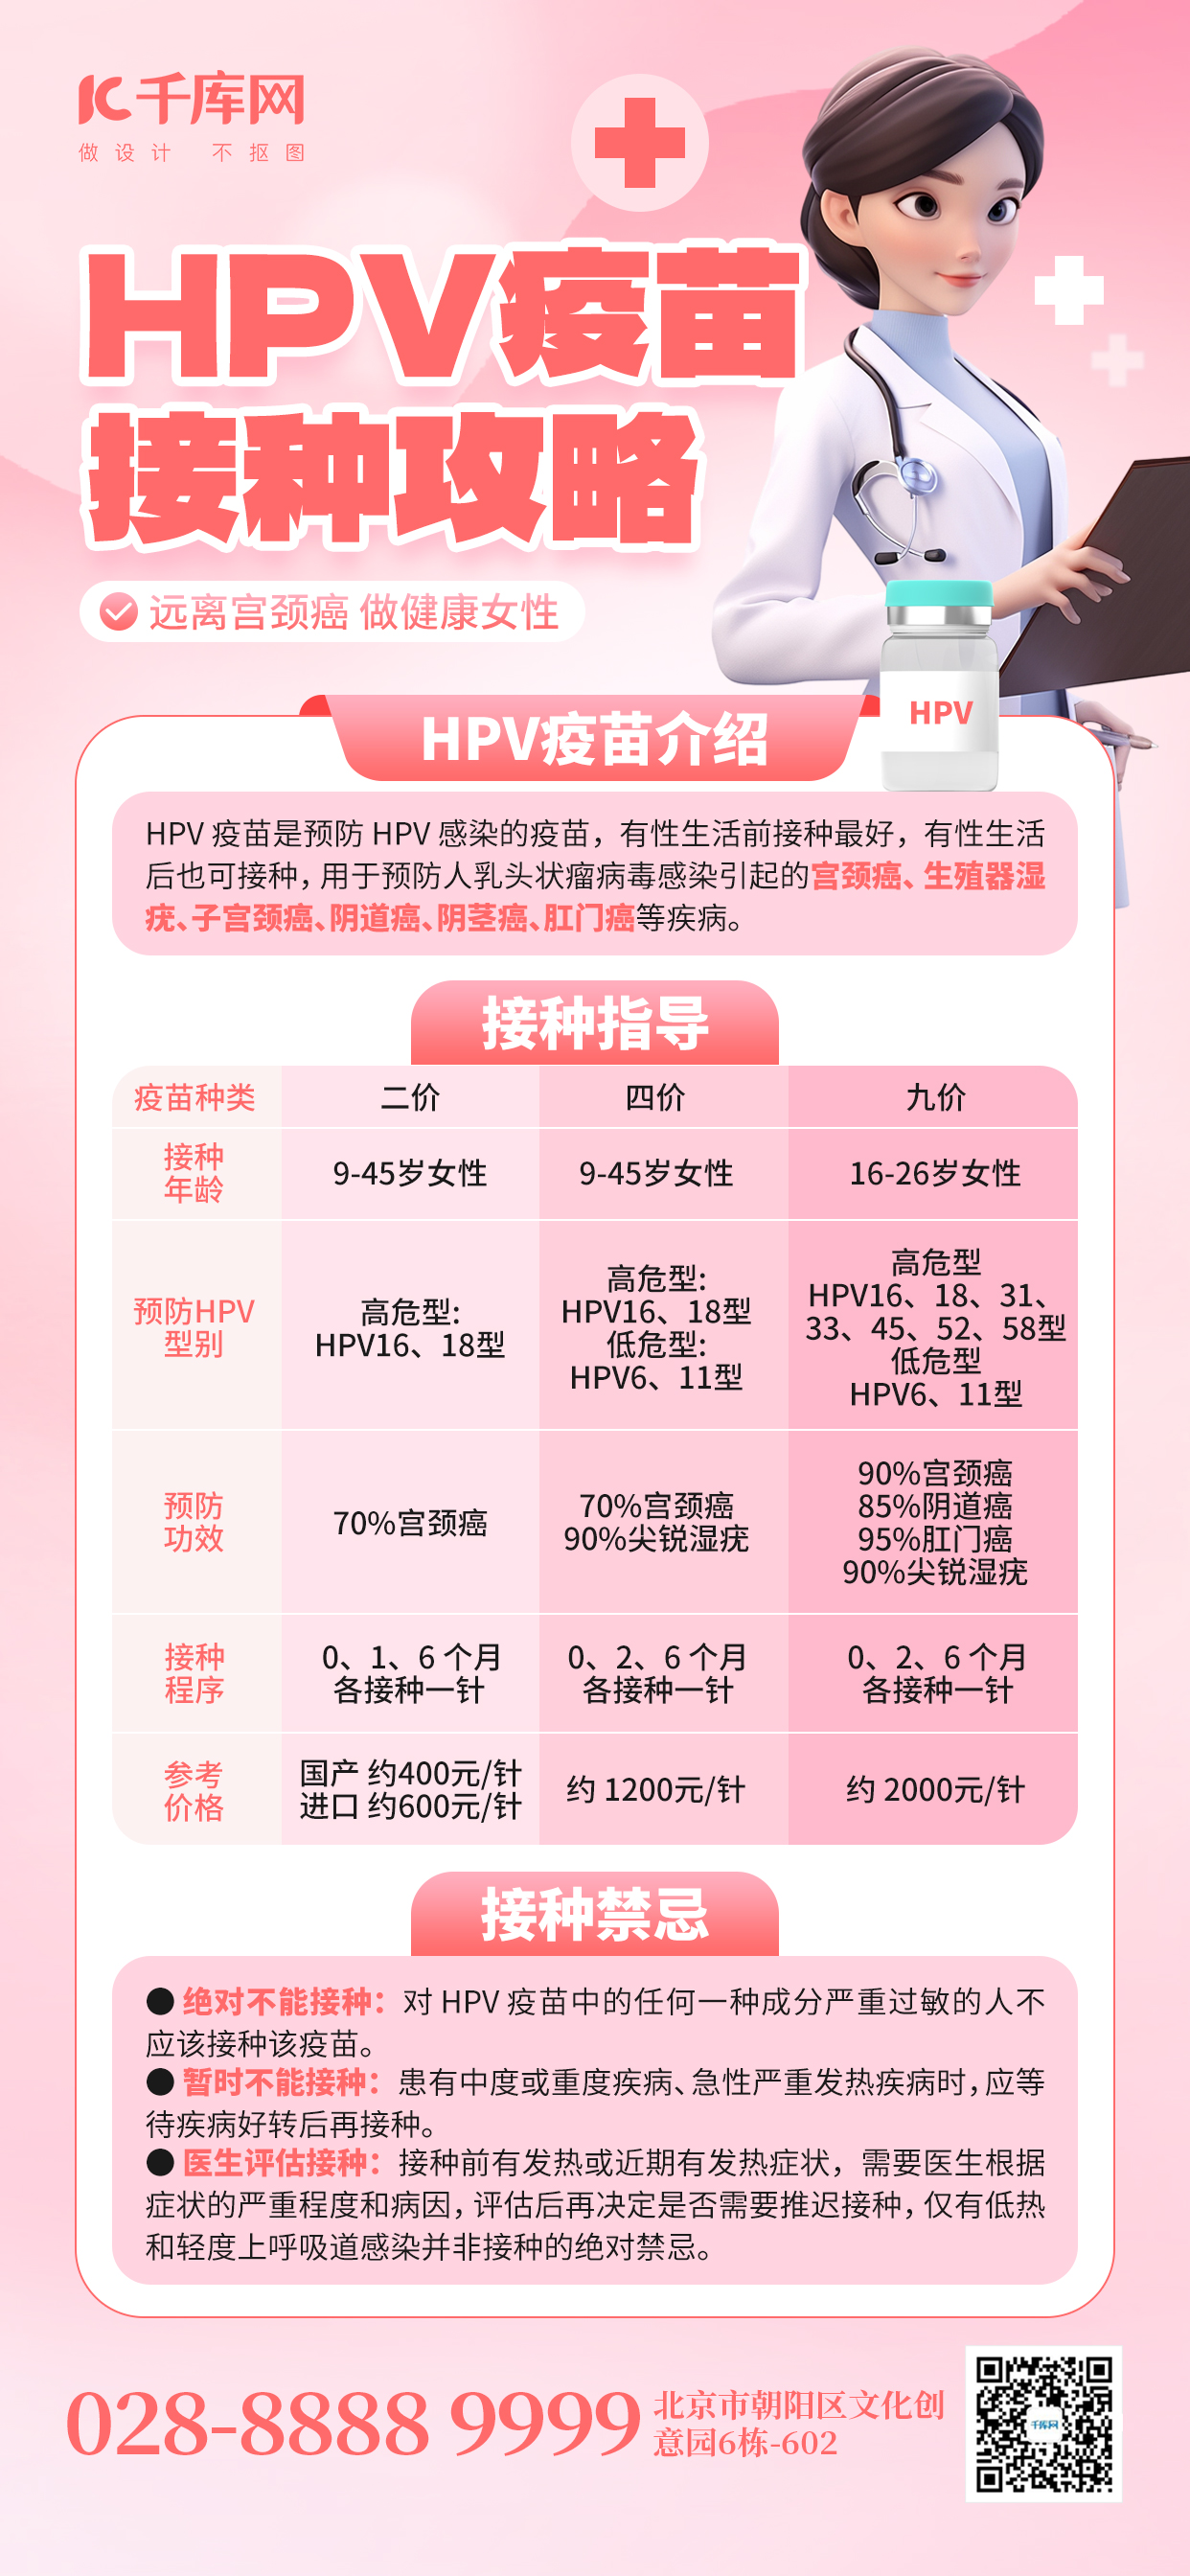 HPV疫苗接种医生粉色创意手机海报宣传海报设计图片